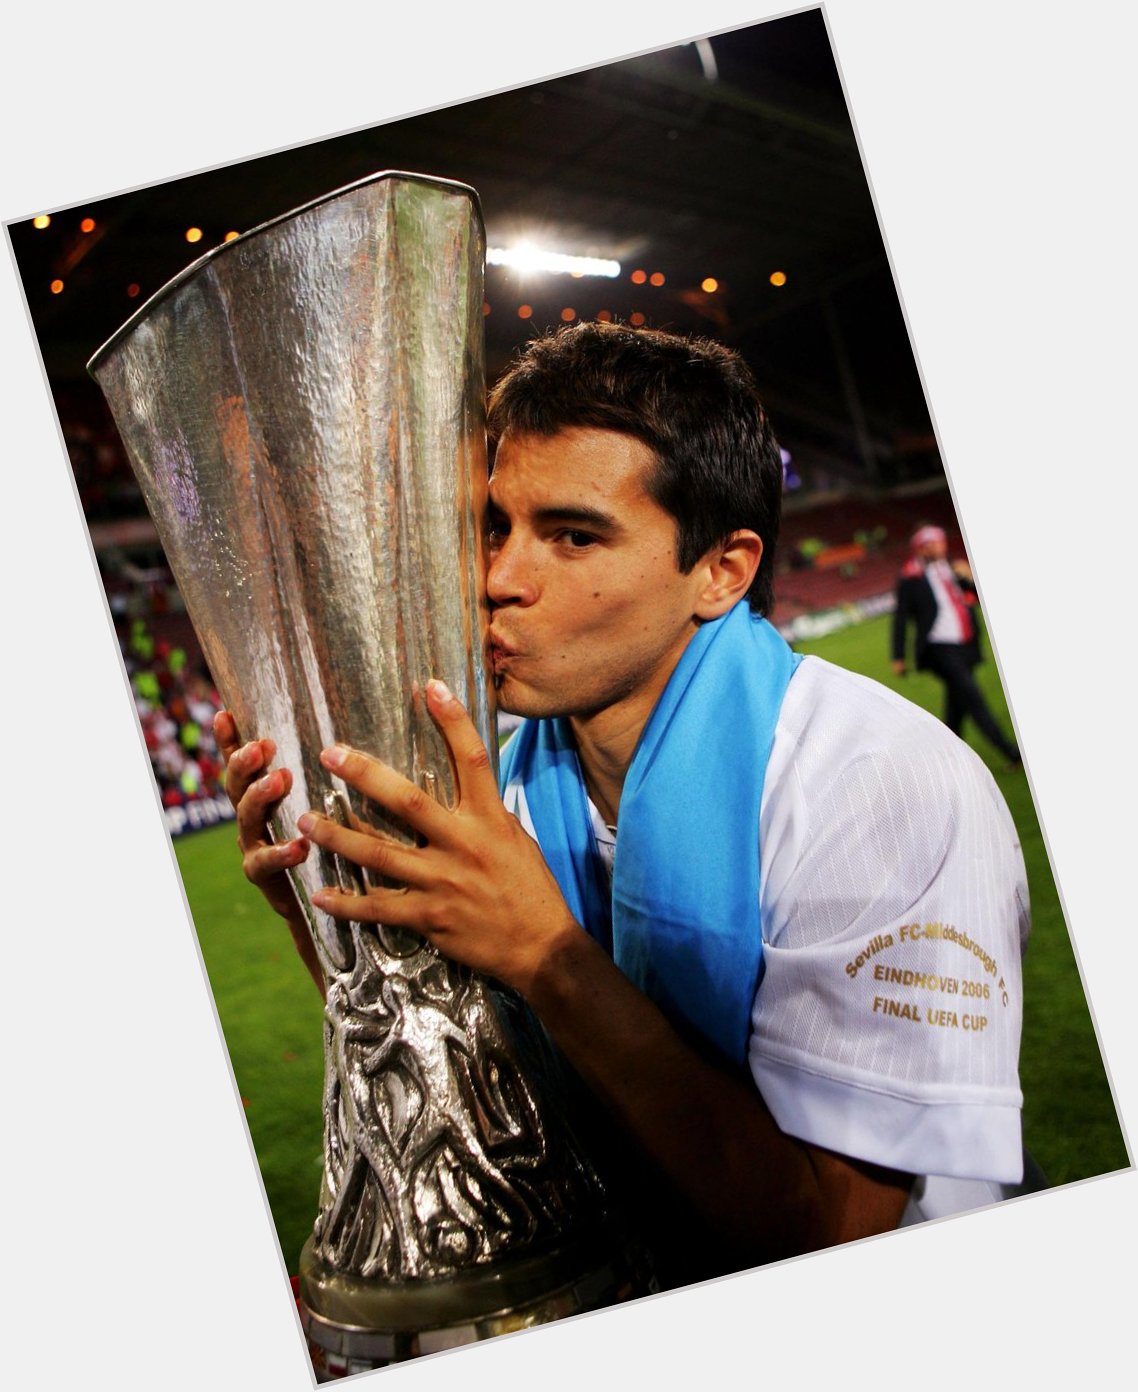 He won the 2006 UEFA Cup with - happy birthday, Javier Saviola! 